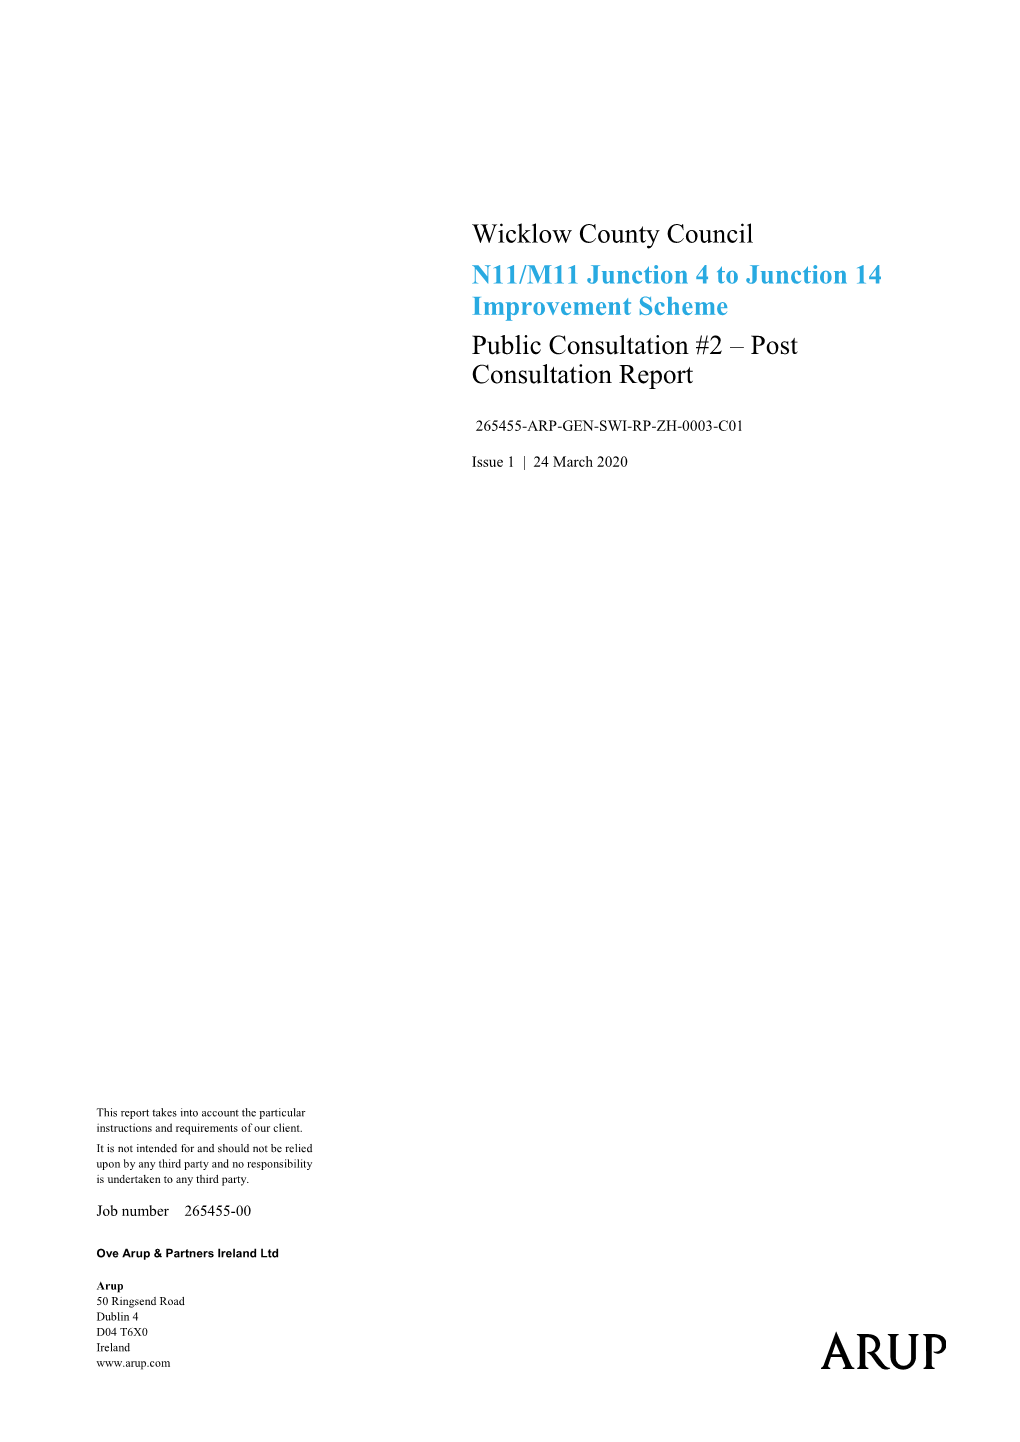 Wicklow County Council N11/M11 Junction 4 to Junction 14 Improvement Scheme Public Consultation #2 – Post Consultation Report